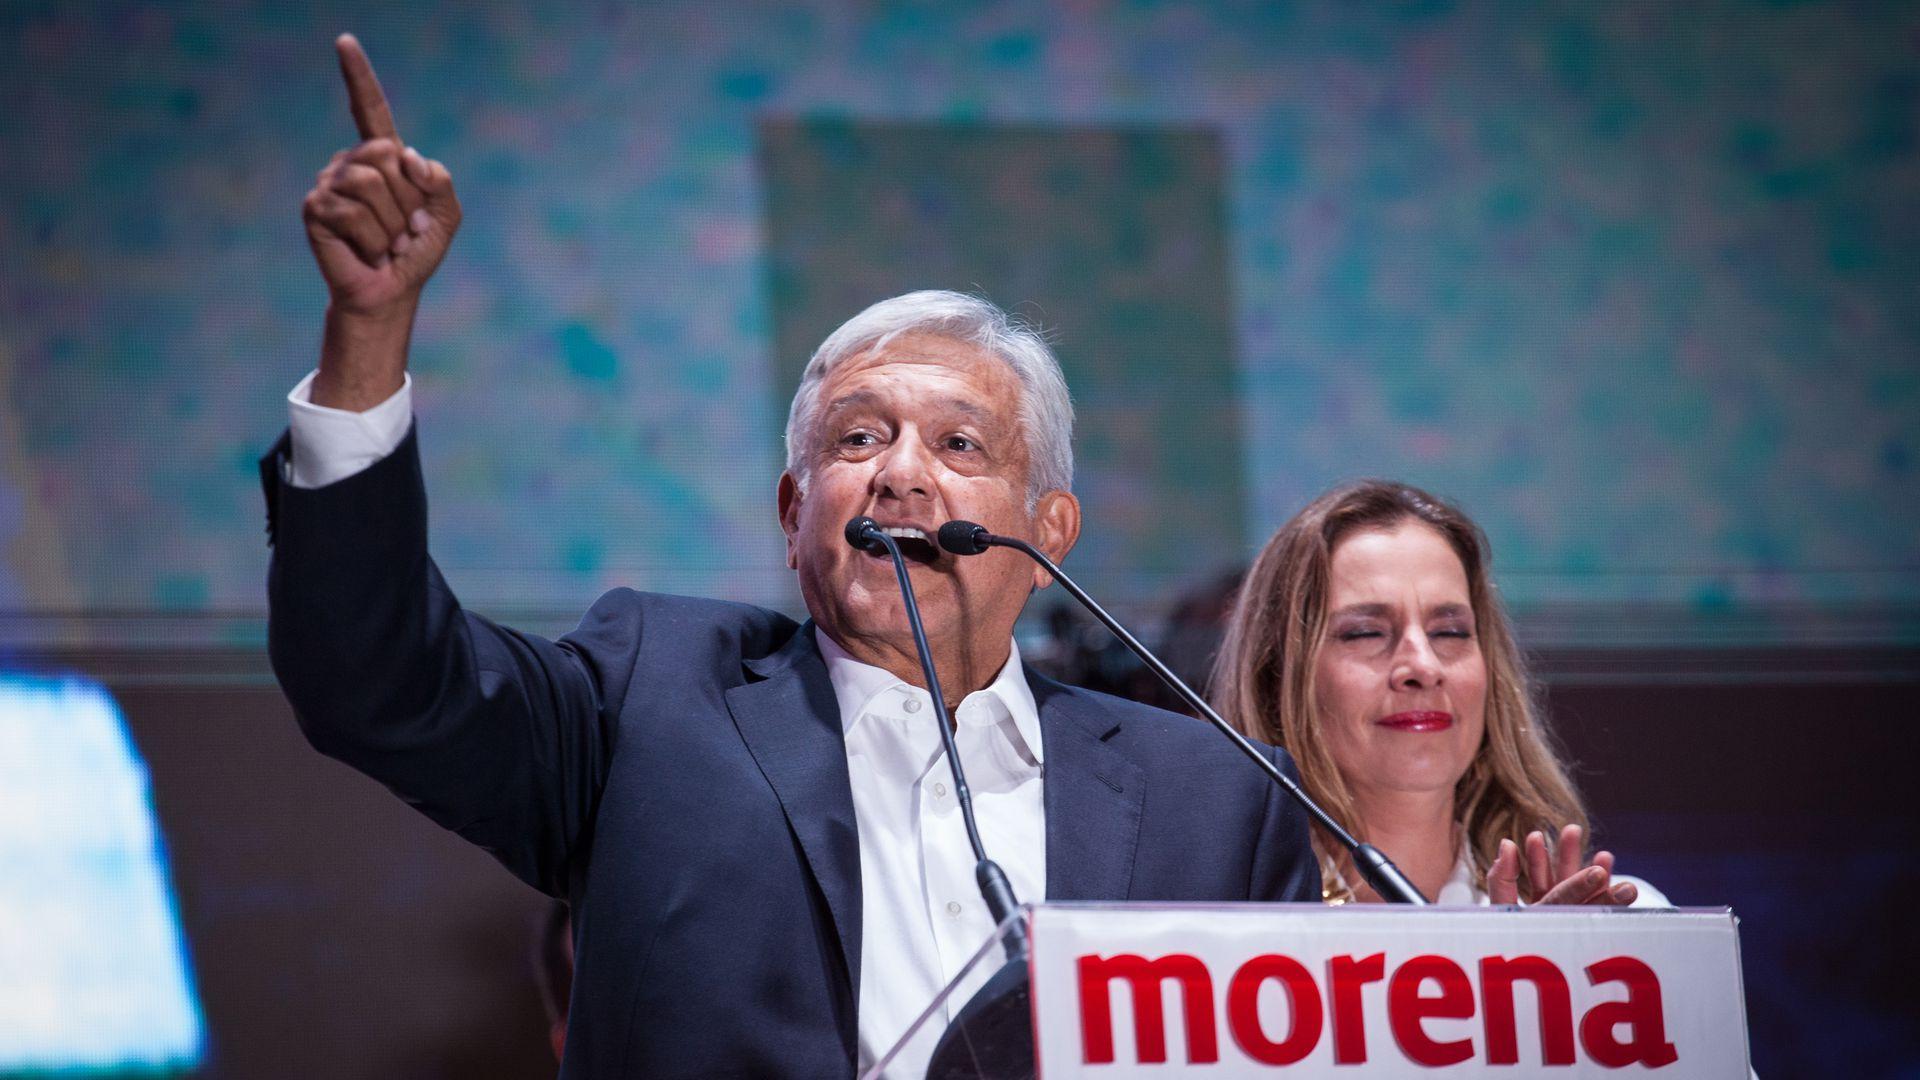 Leftist López Obrador elected Mexico's president after anti